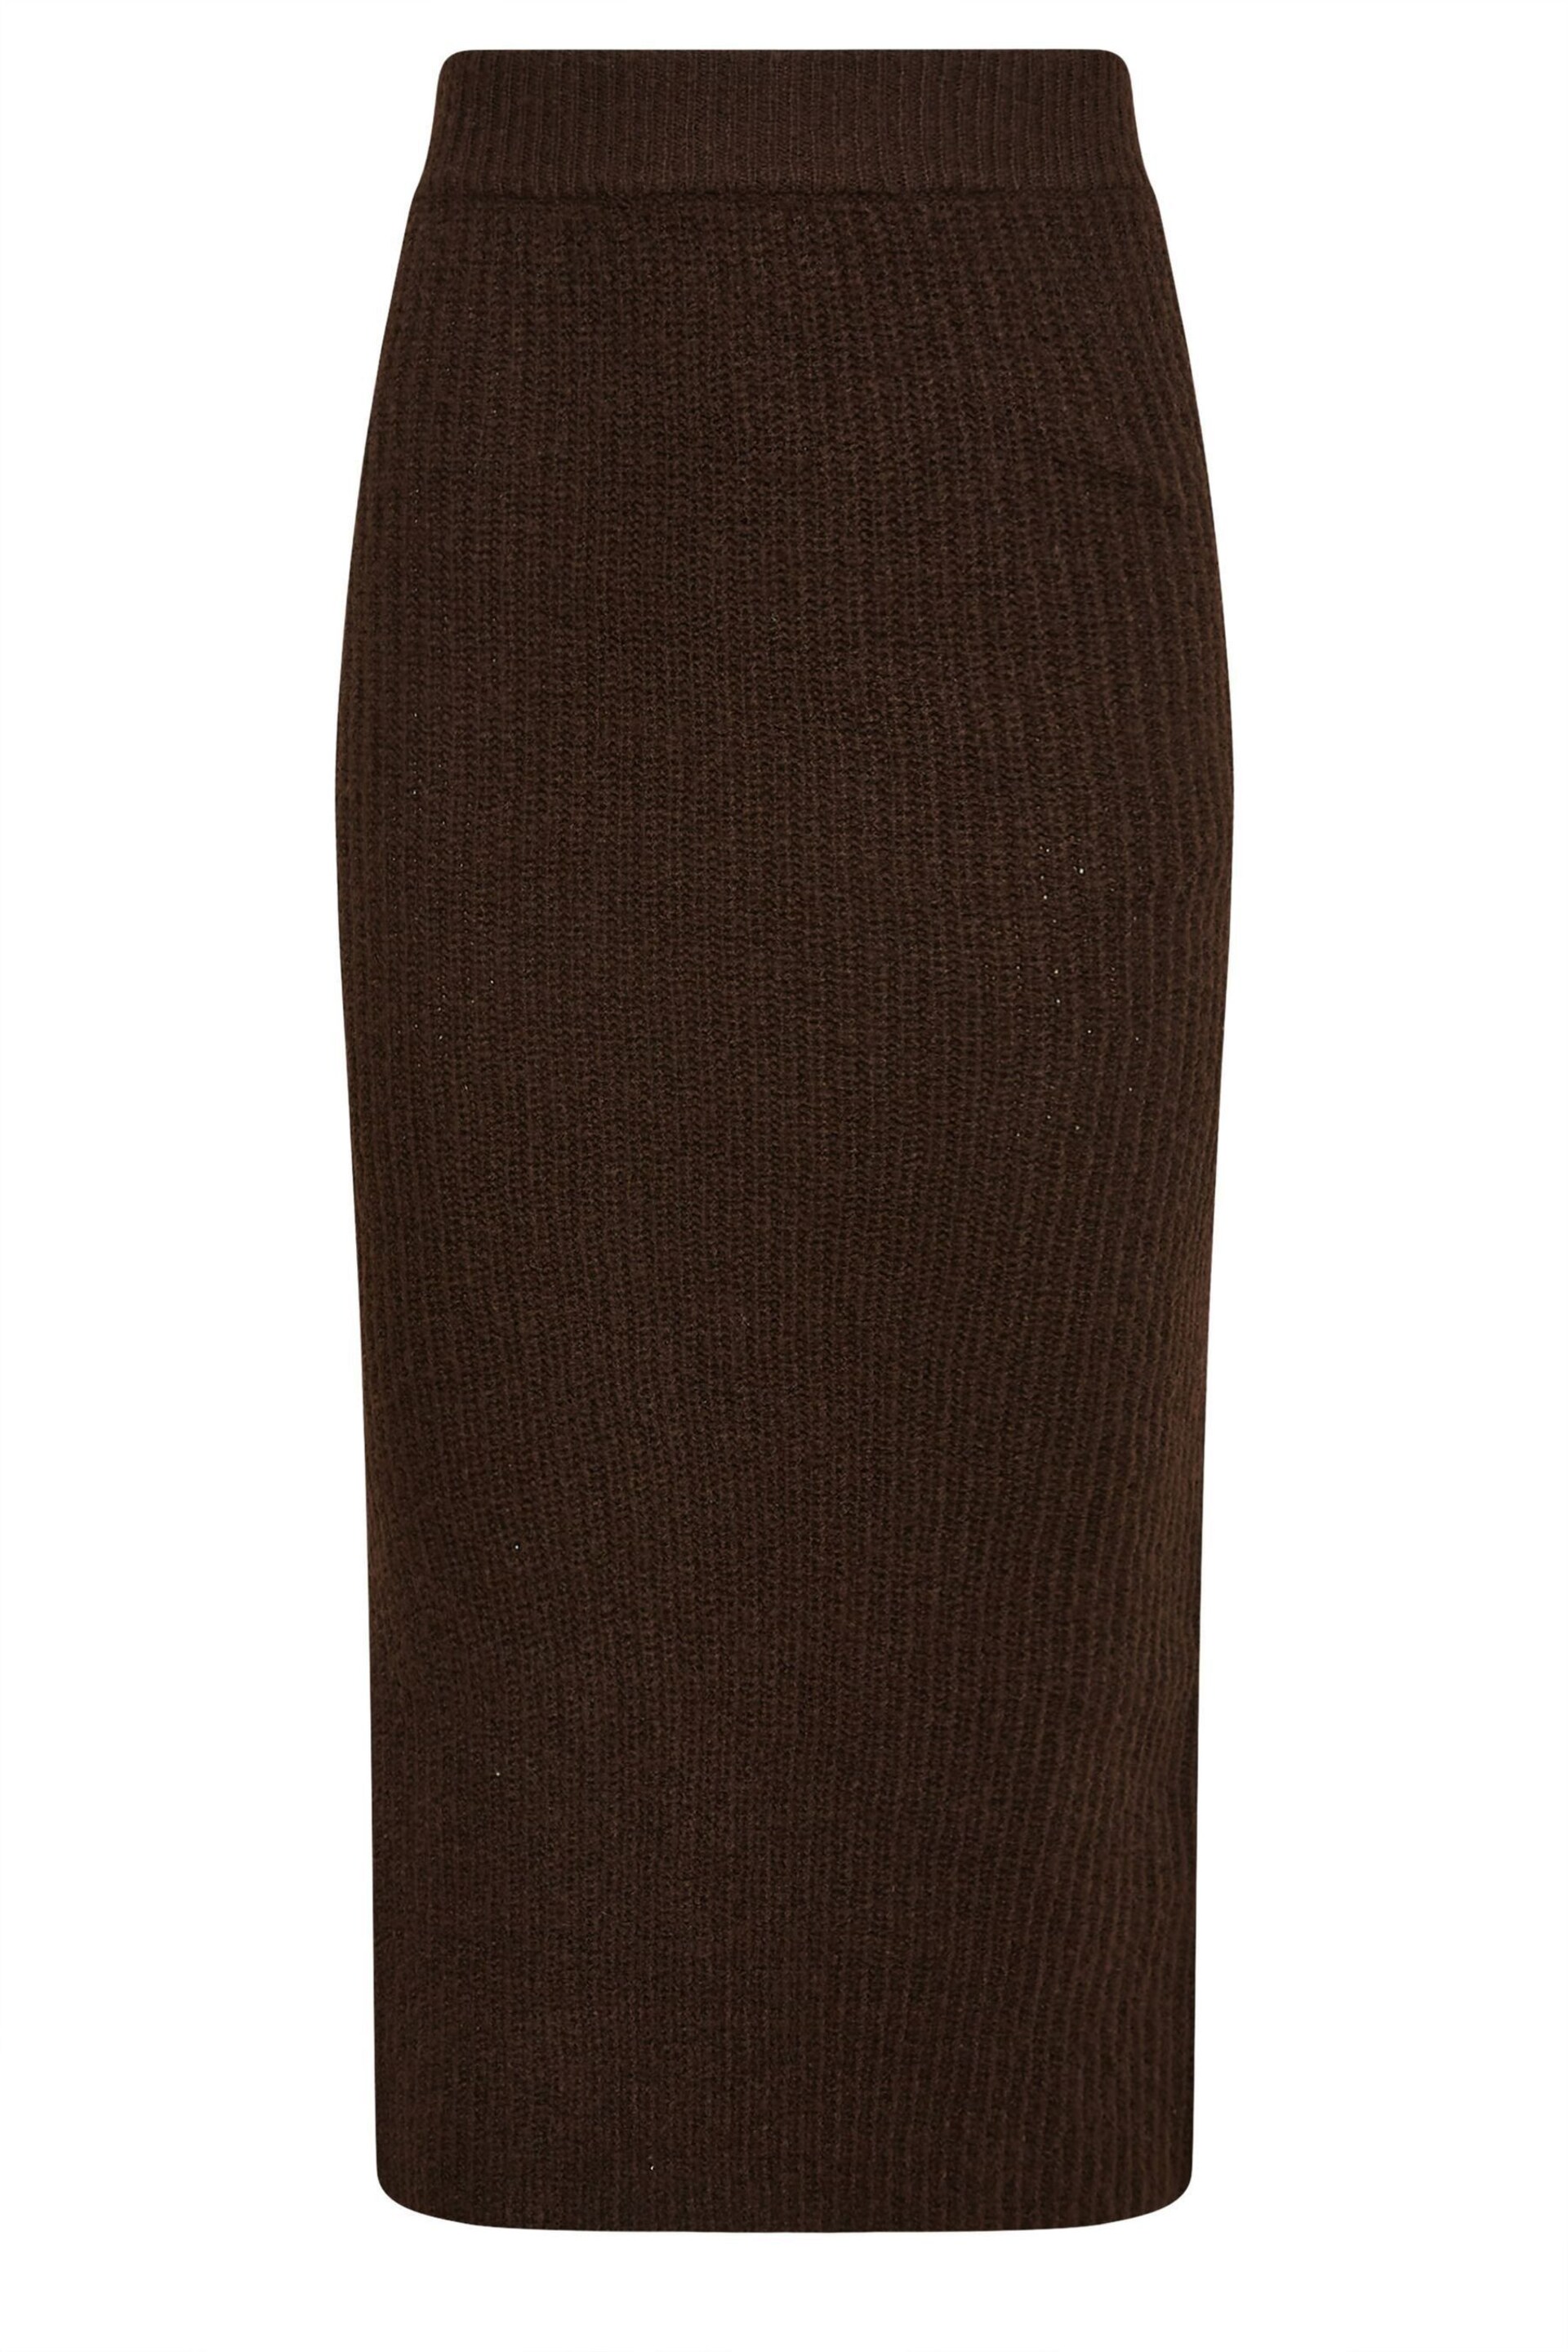 PixieGirl Petite Brown Midi Knitted Skirt - Image 4 of 5